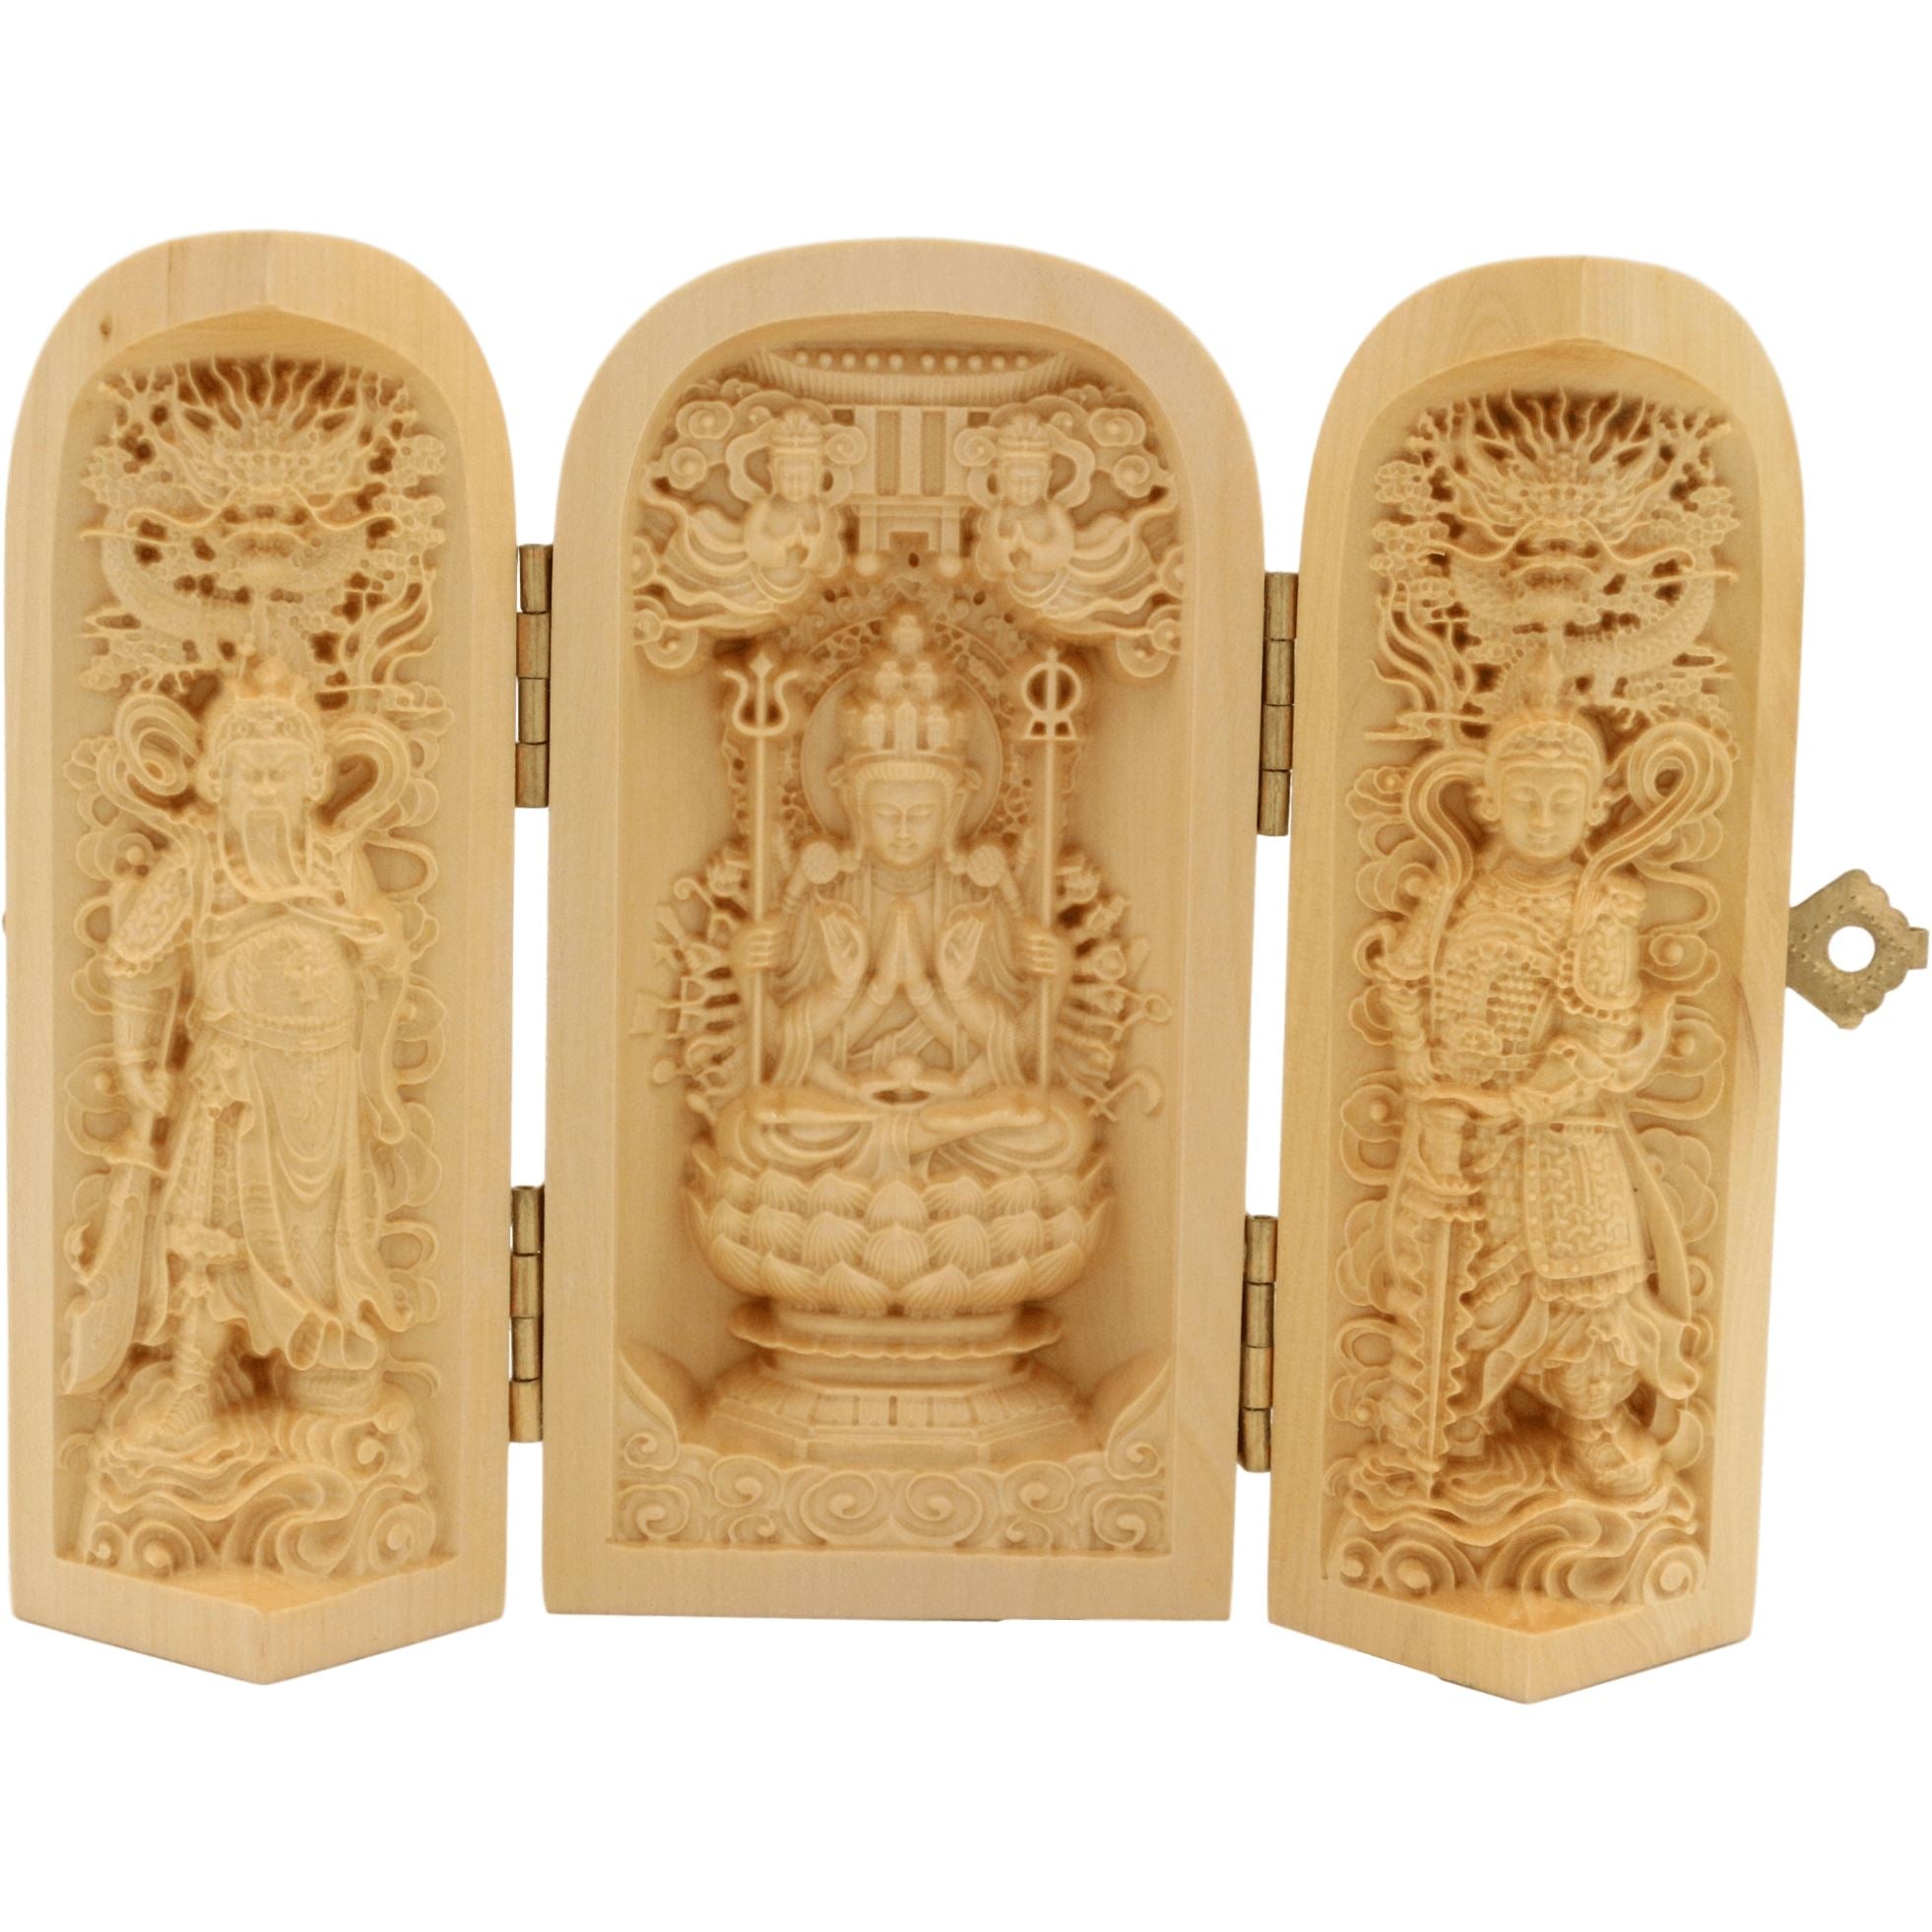 Coffret de 3 statuettes artisanales en bois - Bodhisattva Guanyin, Guan Yu et Skanda